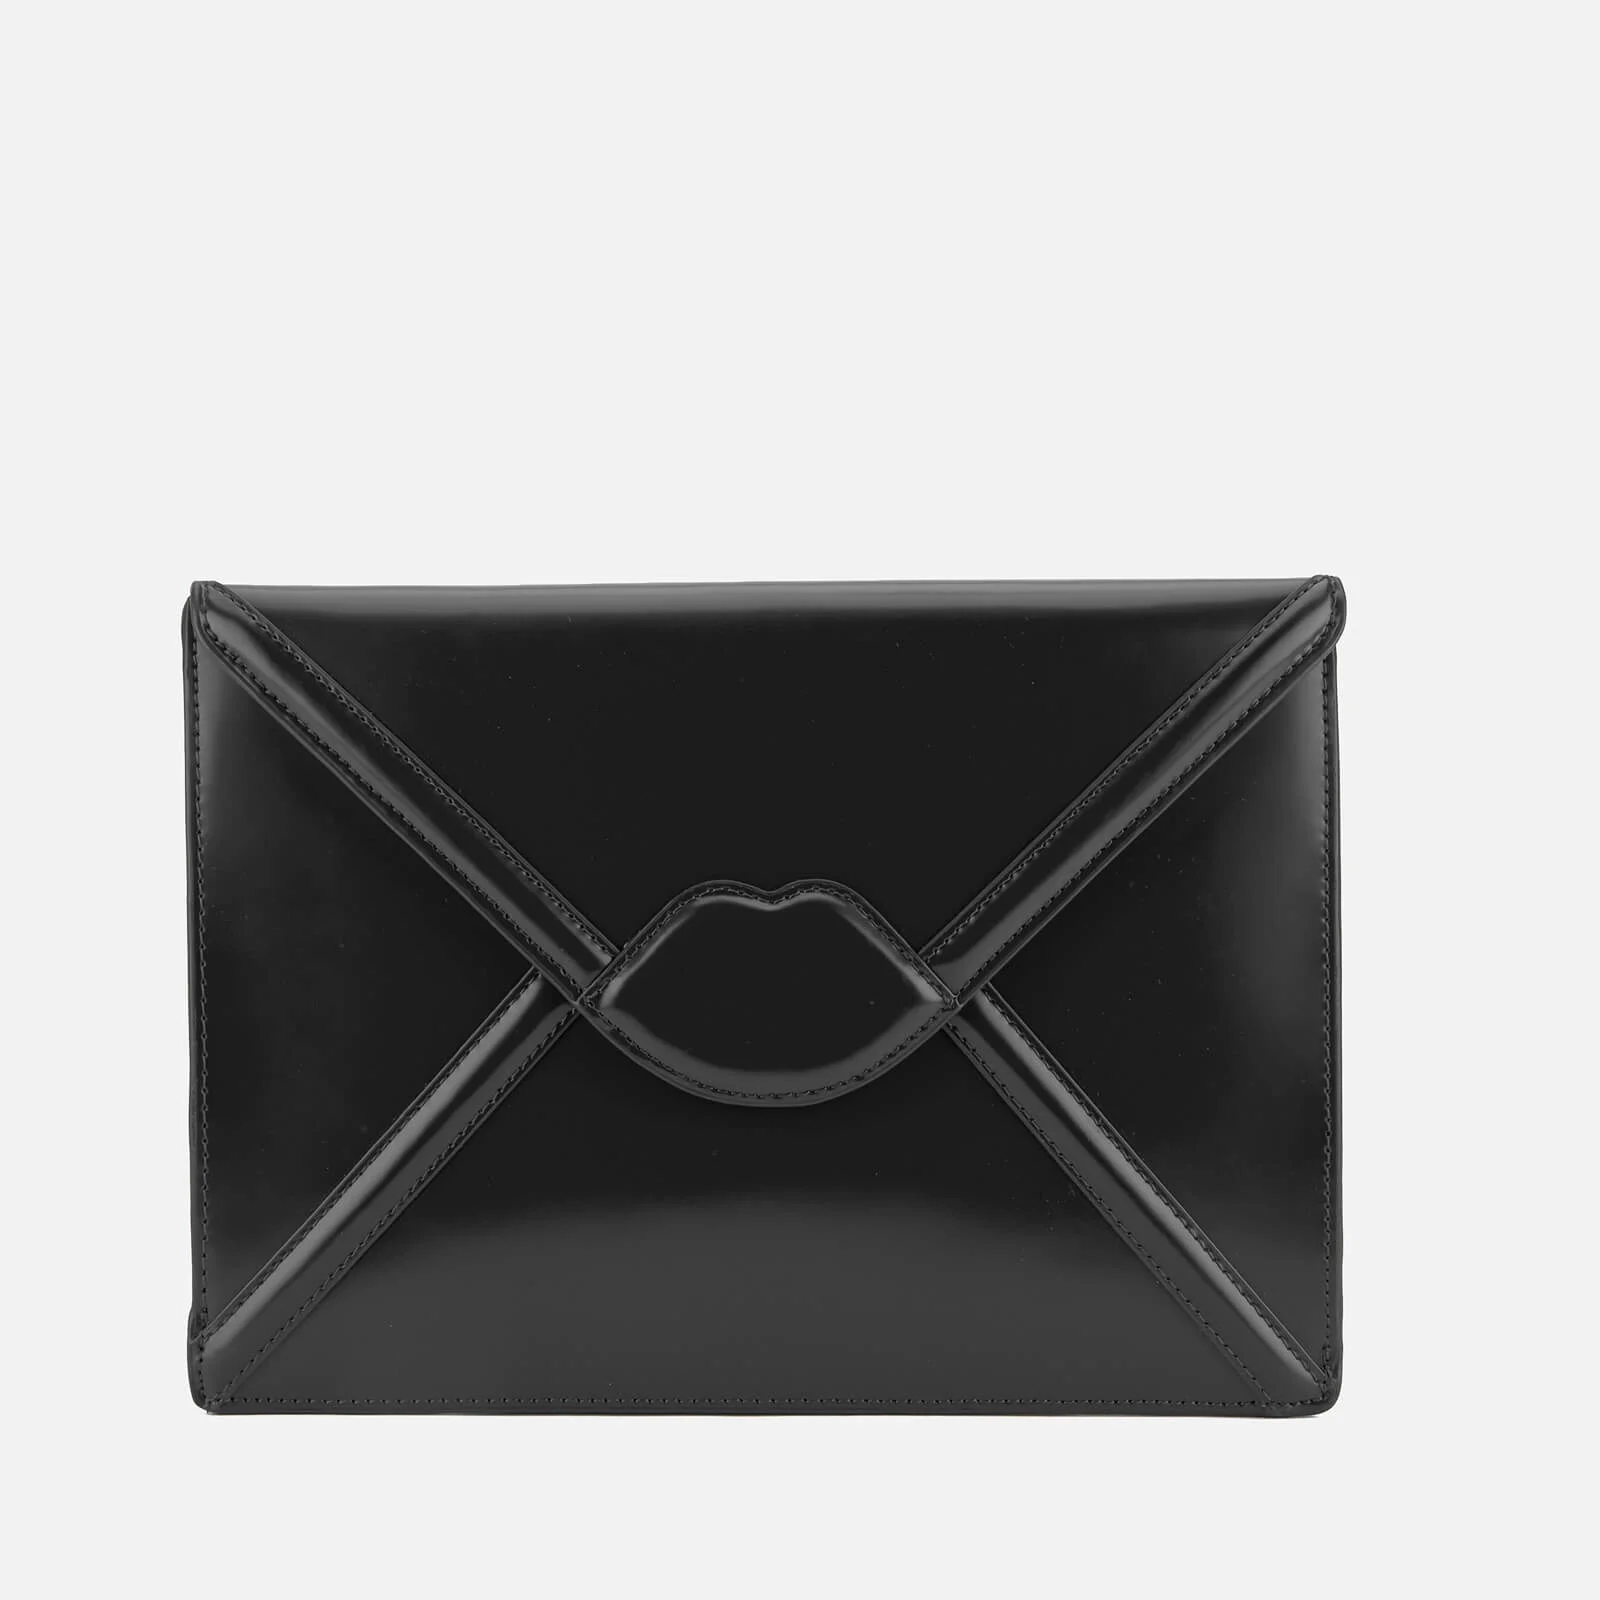 Lulu Guinness Women's Catherine Large Lips Envelope Clutch Bag - Black Image 1